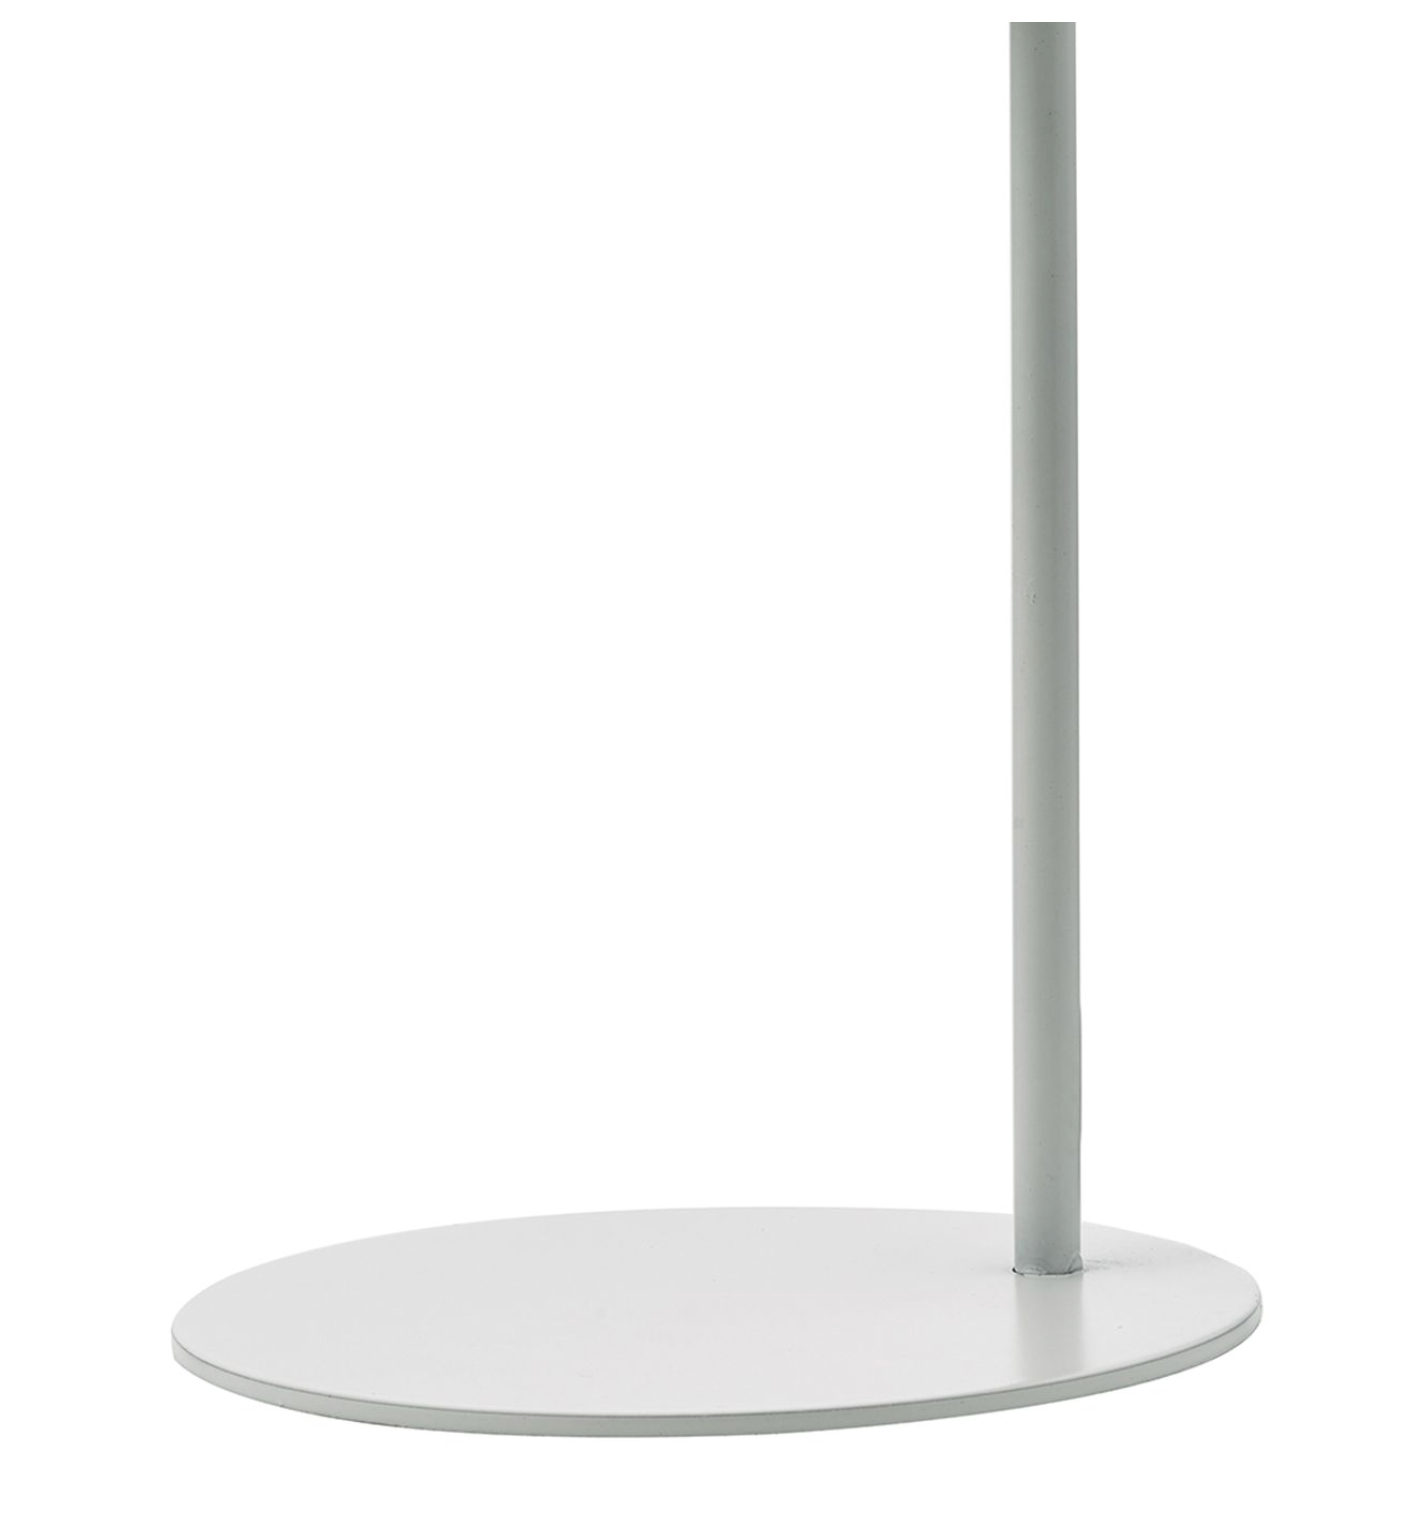 FIE Task Lamp, Pale Green & White - ID 11992